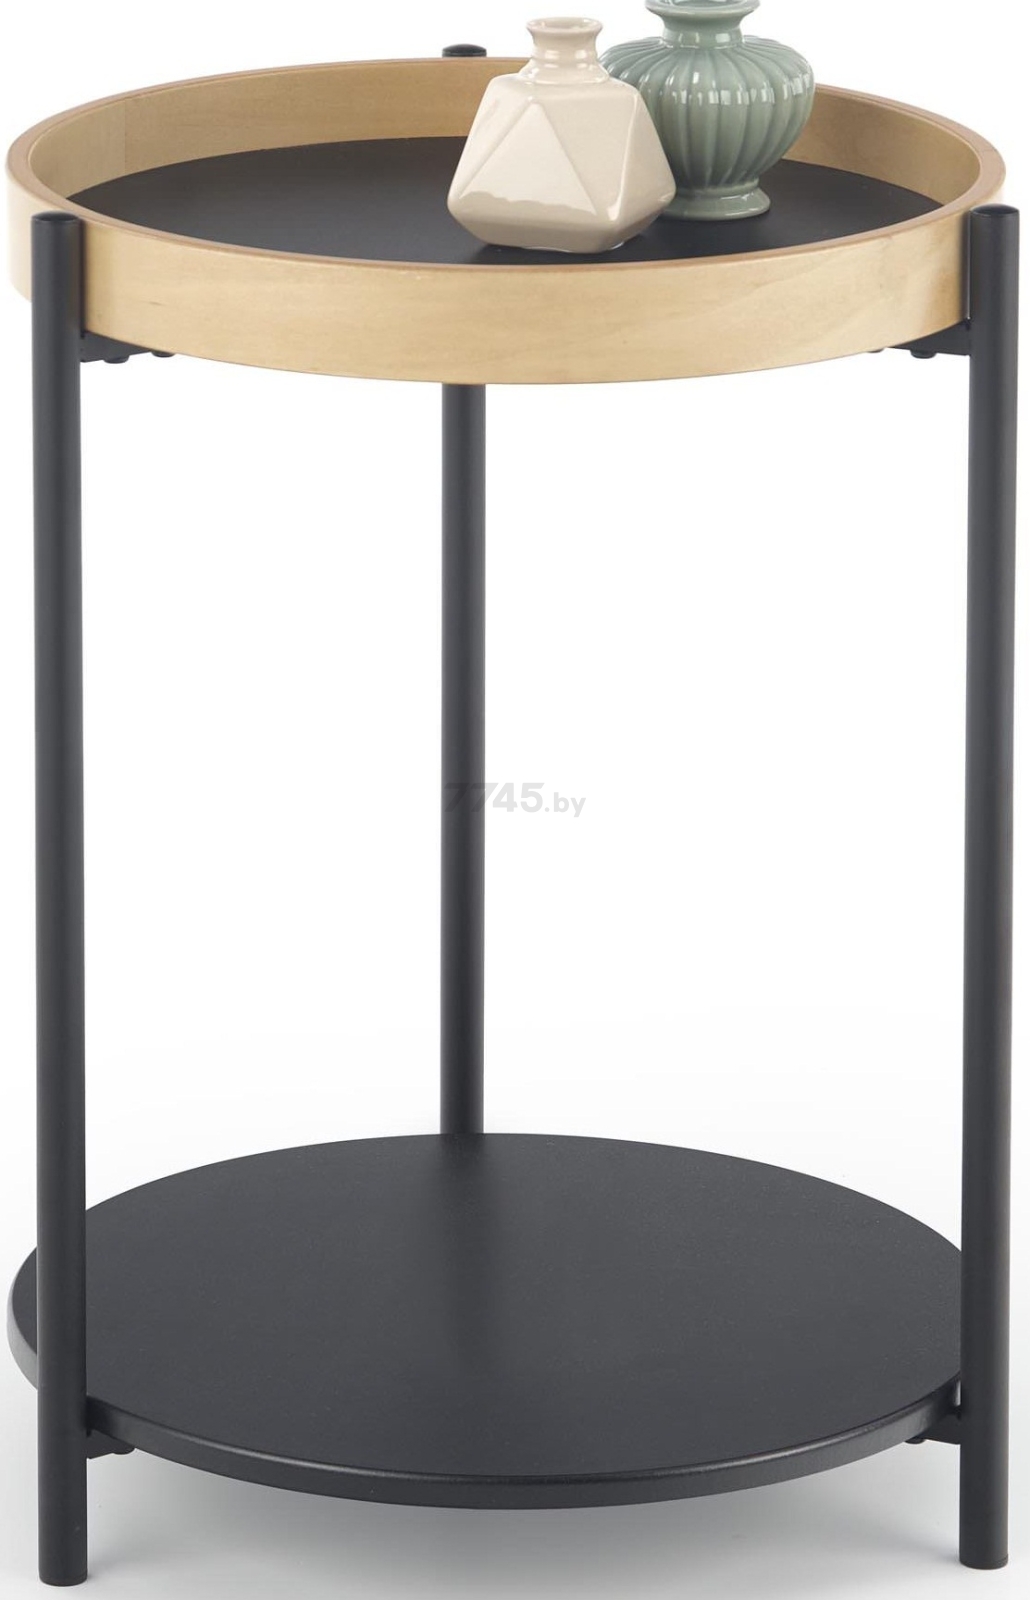 Стол журнальный HALMAR Rolo дуб натуральный/черный 44х55 см (V-CH-ROLO-LAW)